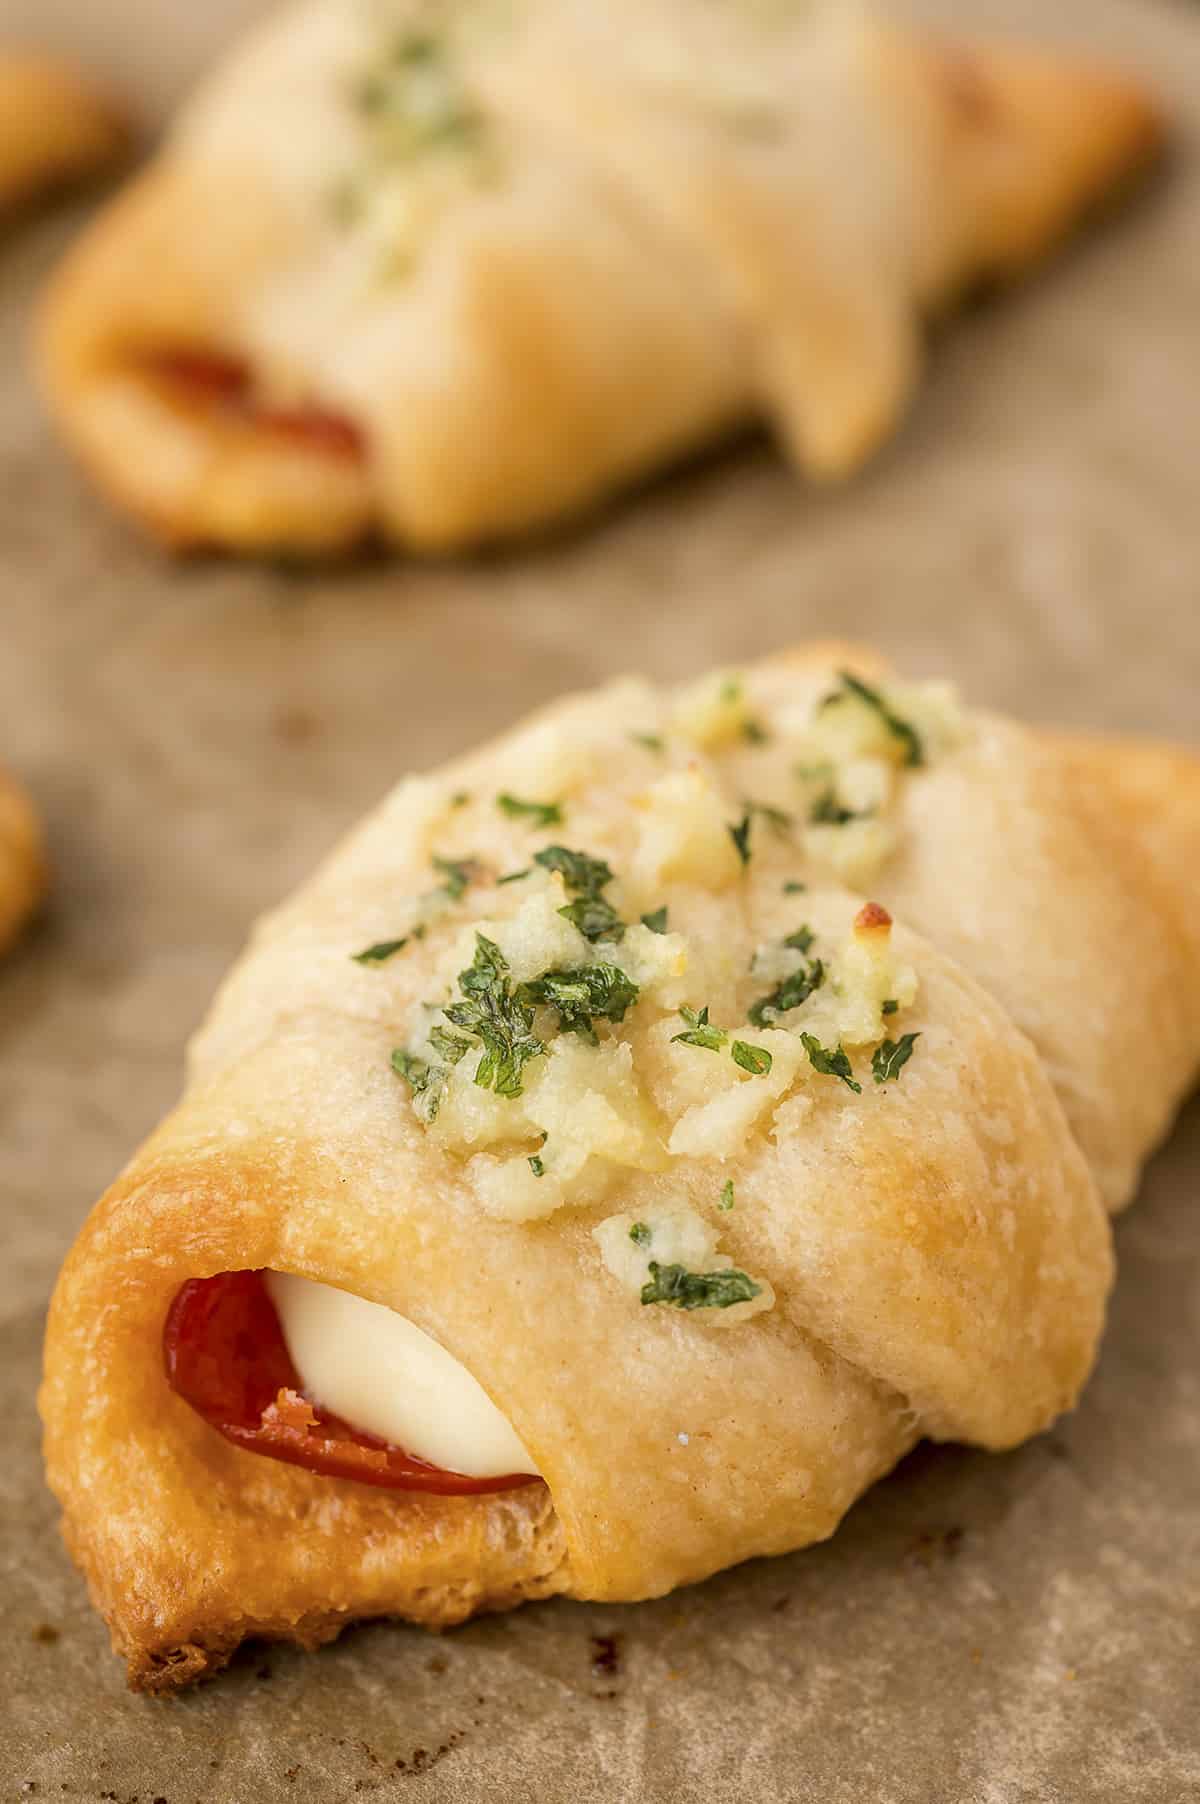 https://www.bunsinmyoven.com/wp-content/uploads/2014/10/homemade-pizza-rolls.jpg